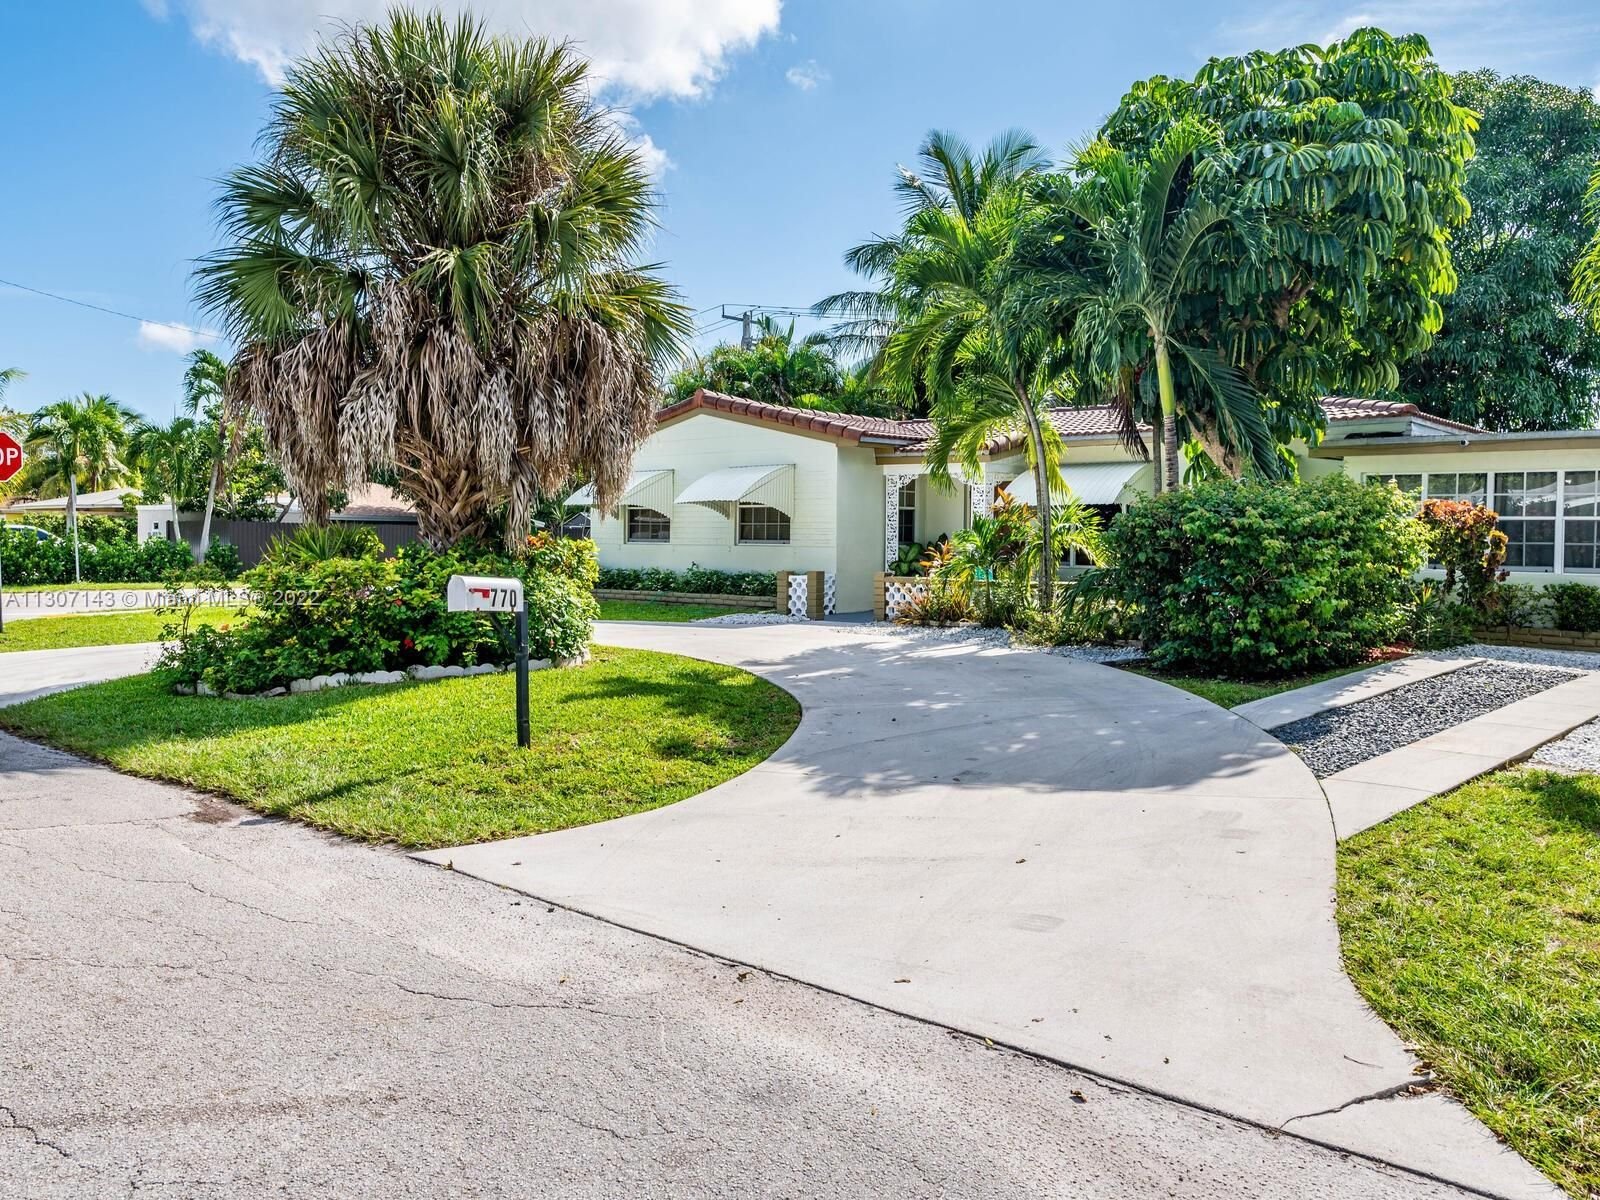 Real estate property located at 770 160th St, Miami-Dade County, Miami, FL